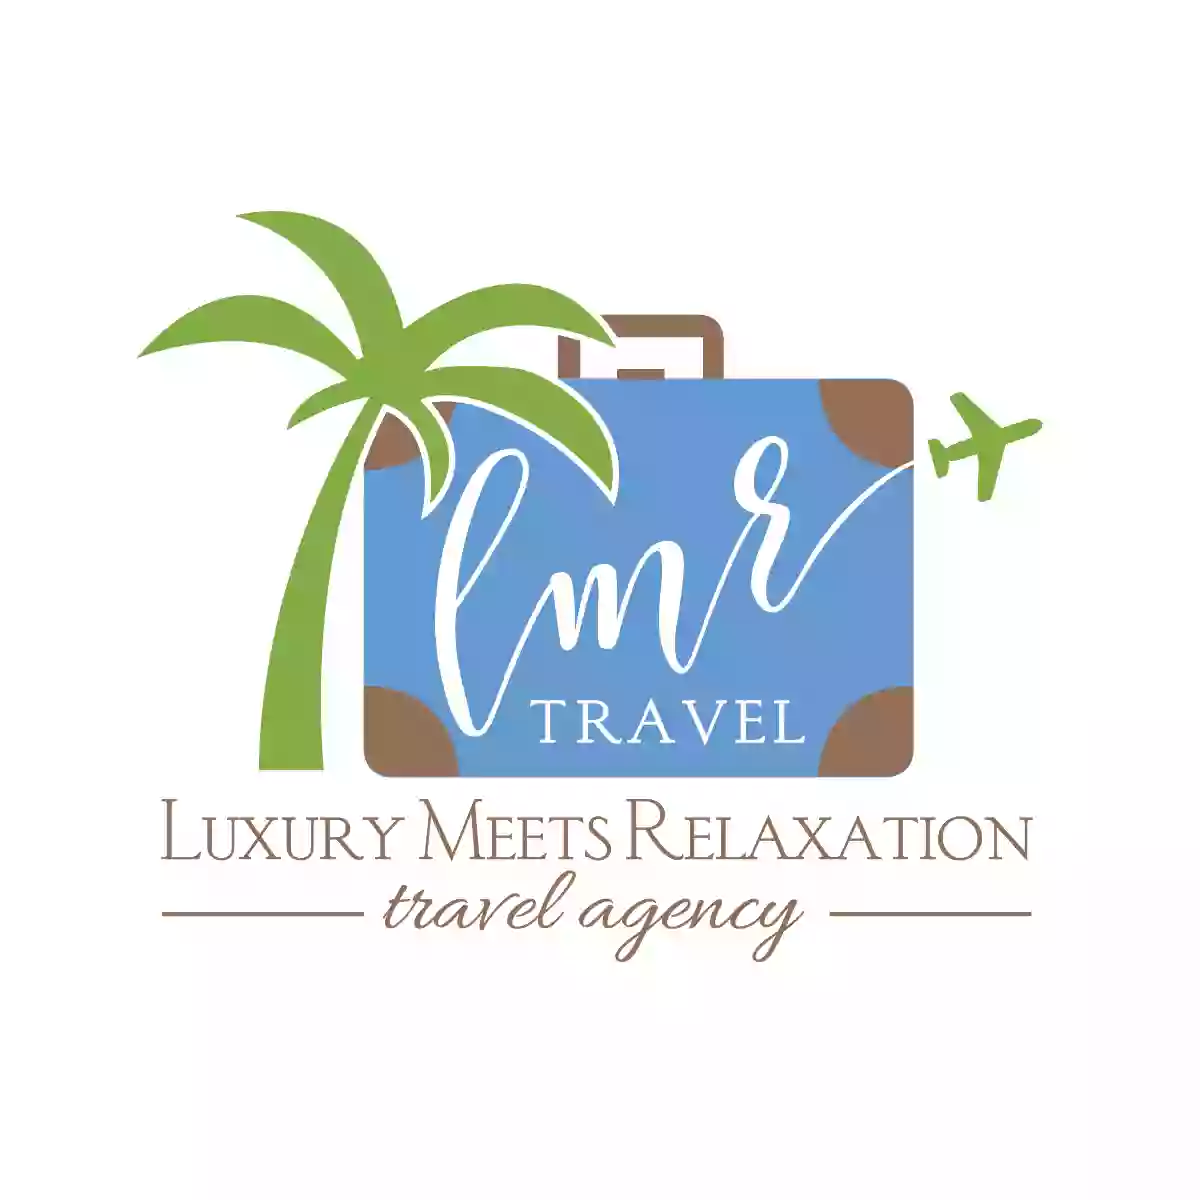 LMR Travel LLC